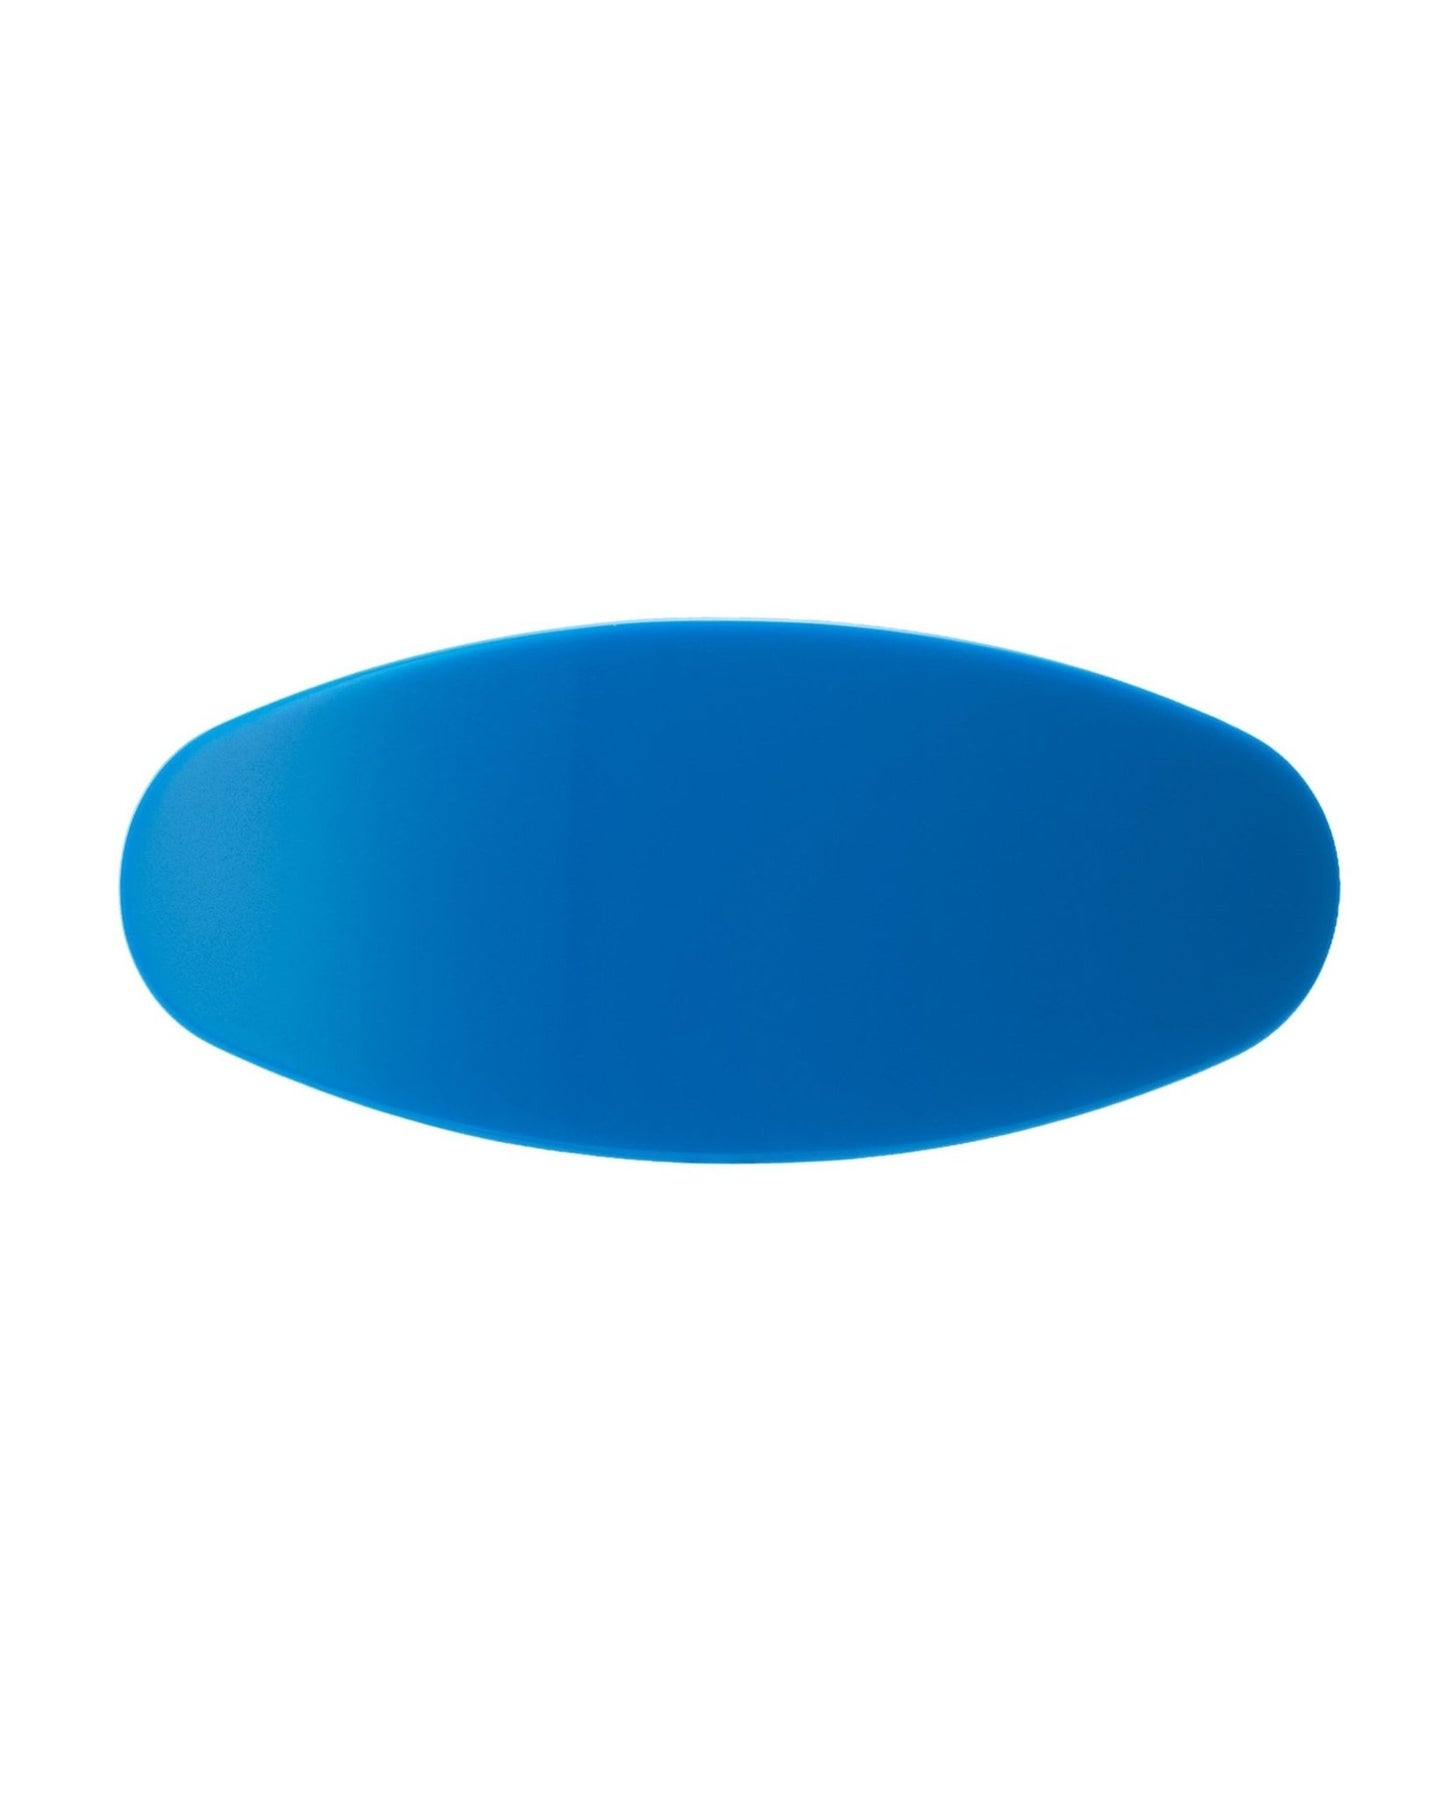 Jumbo Oval Clip in Bright Blue - MACHETE